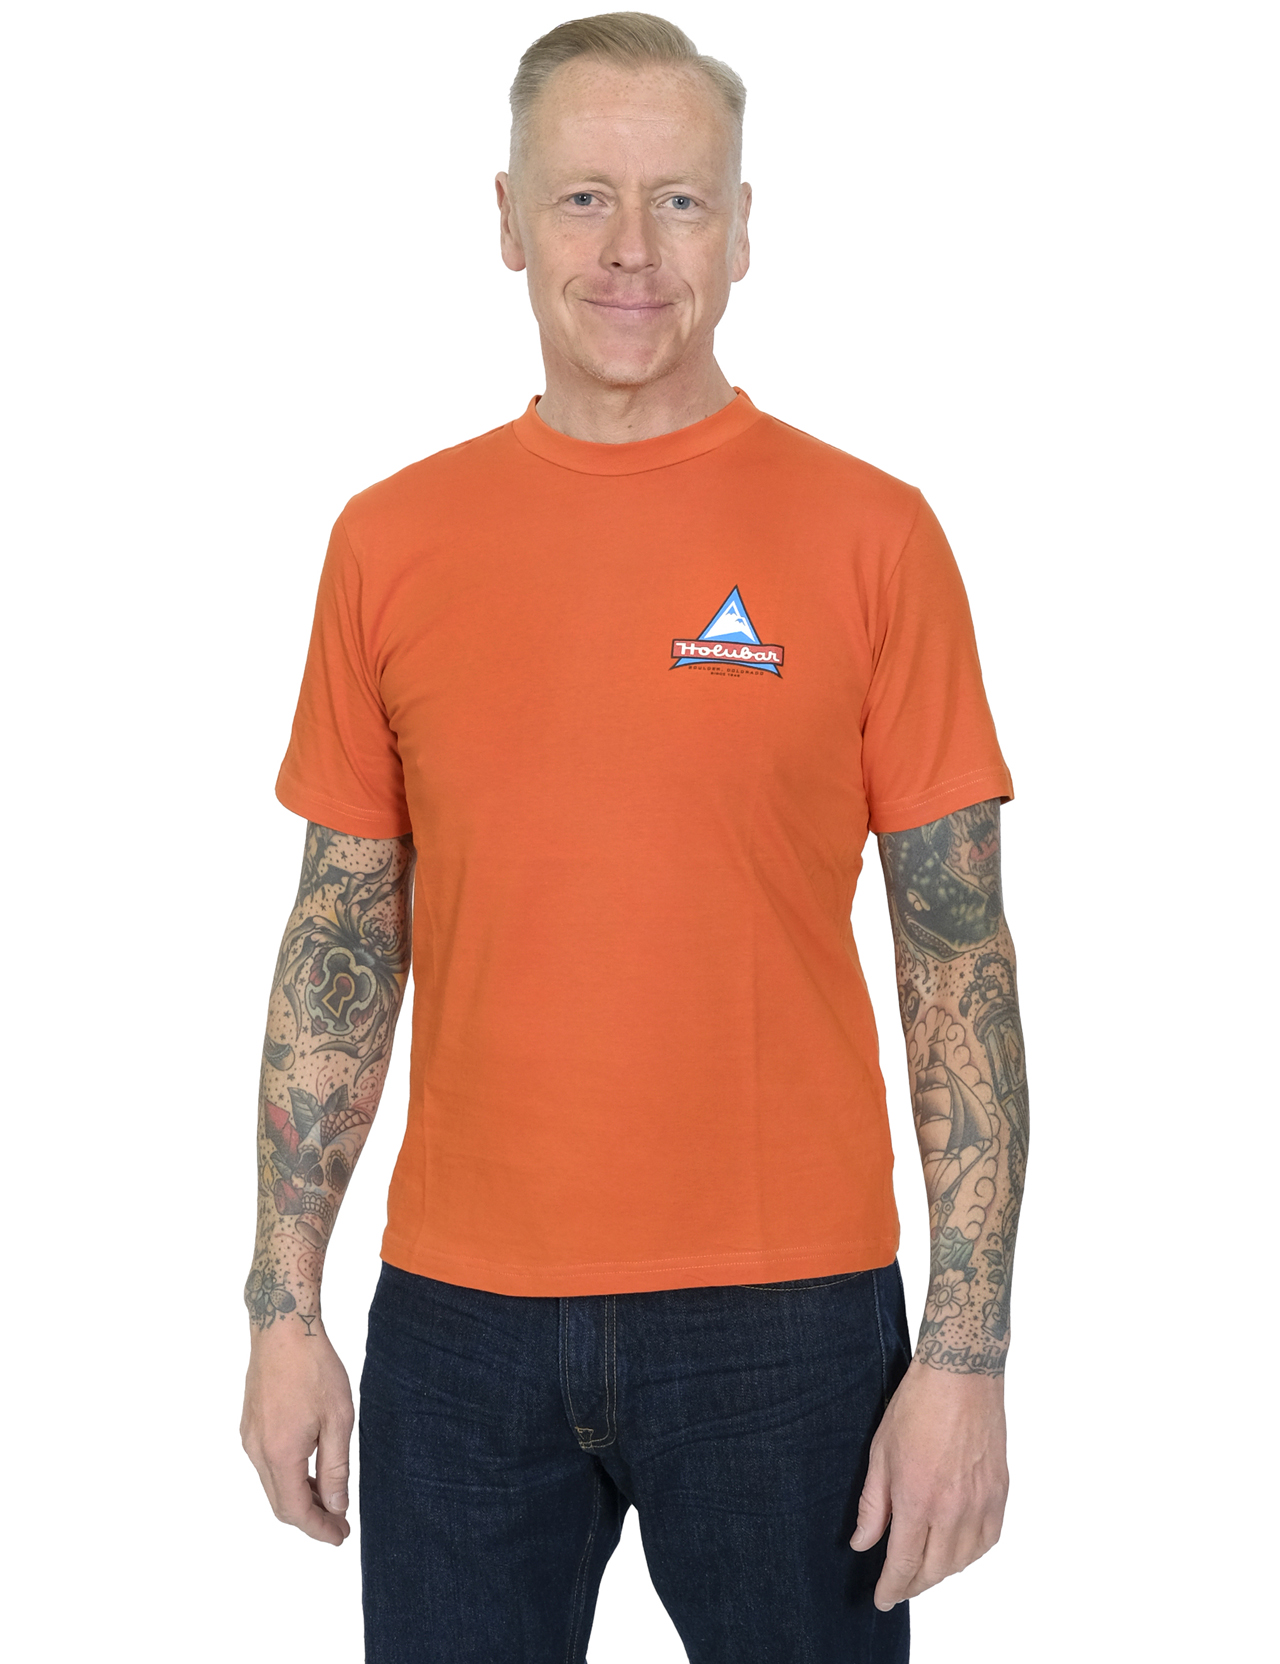 Holubar - JJ20 Mountain 2 T-Shirt - Orange